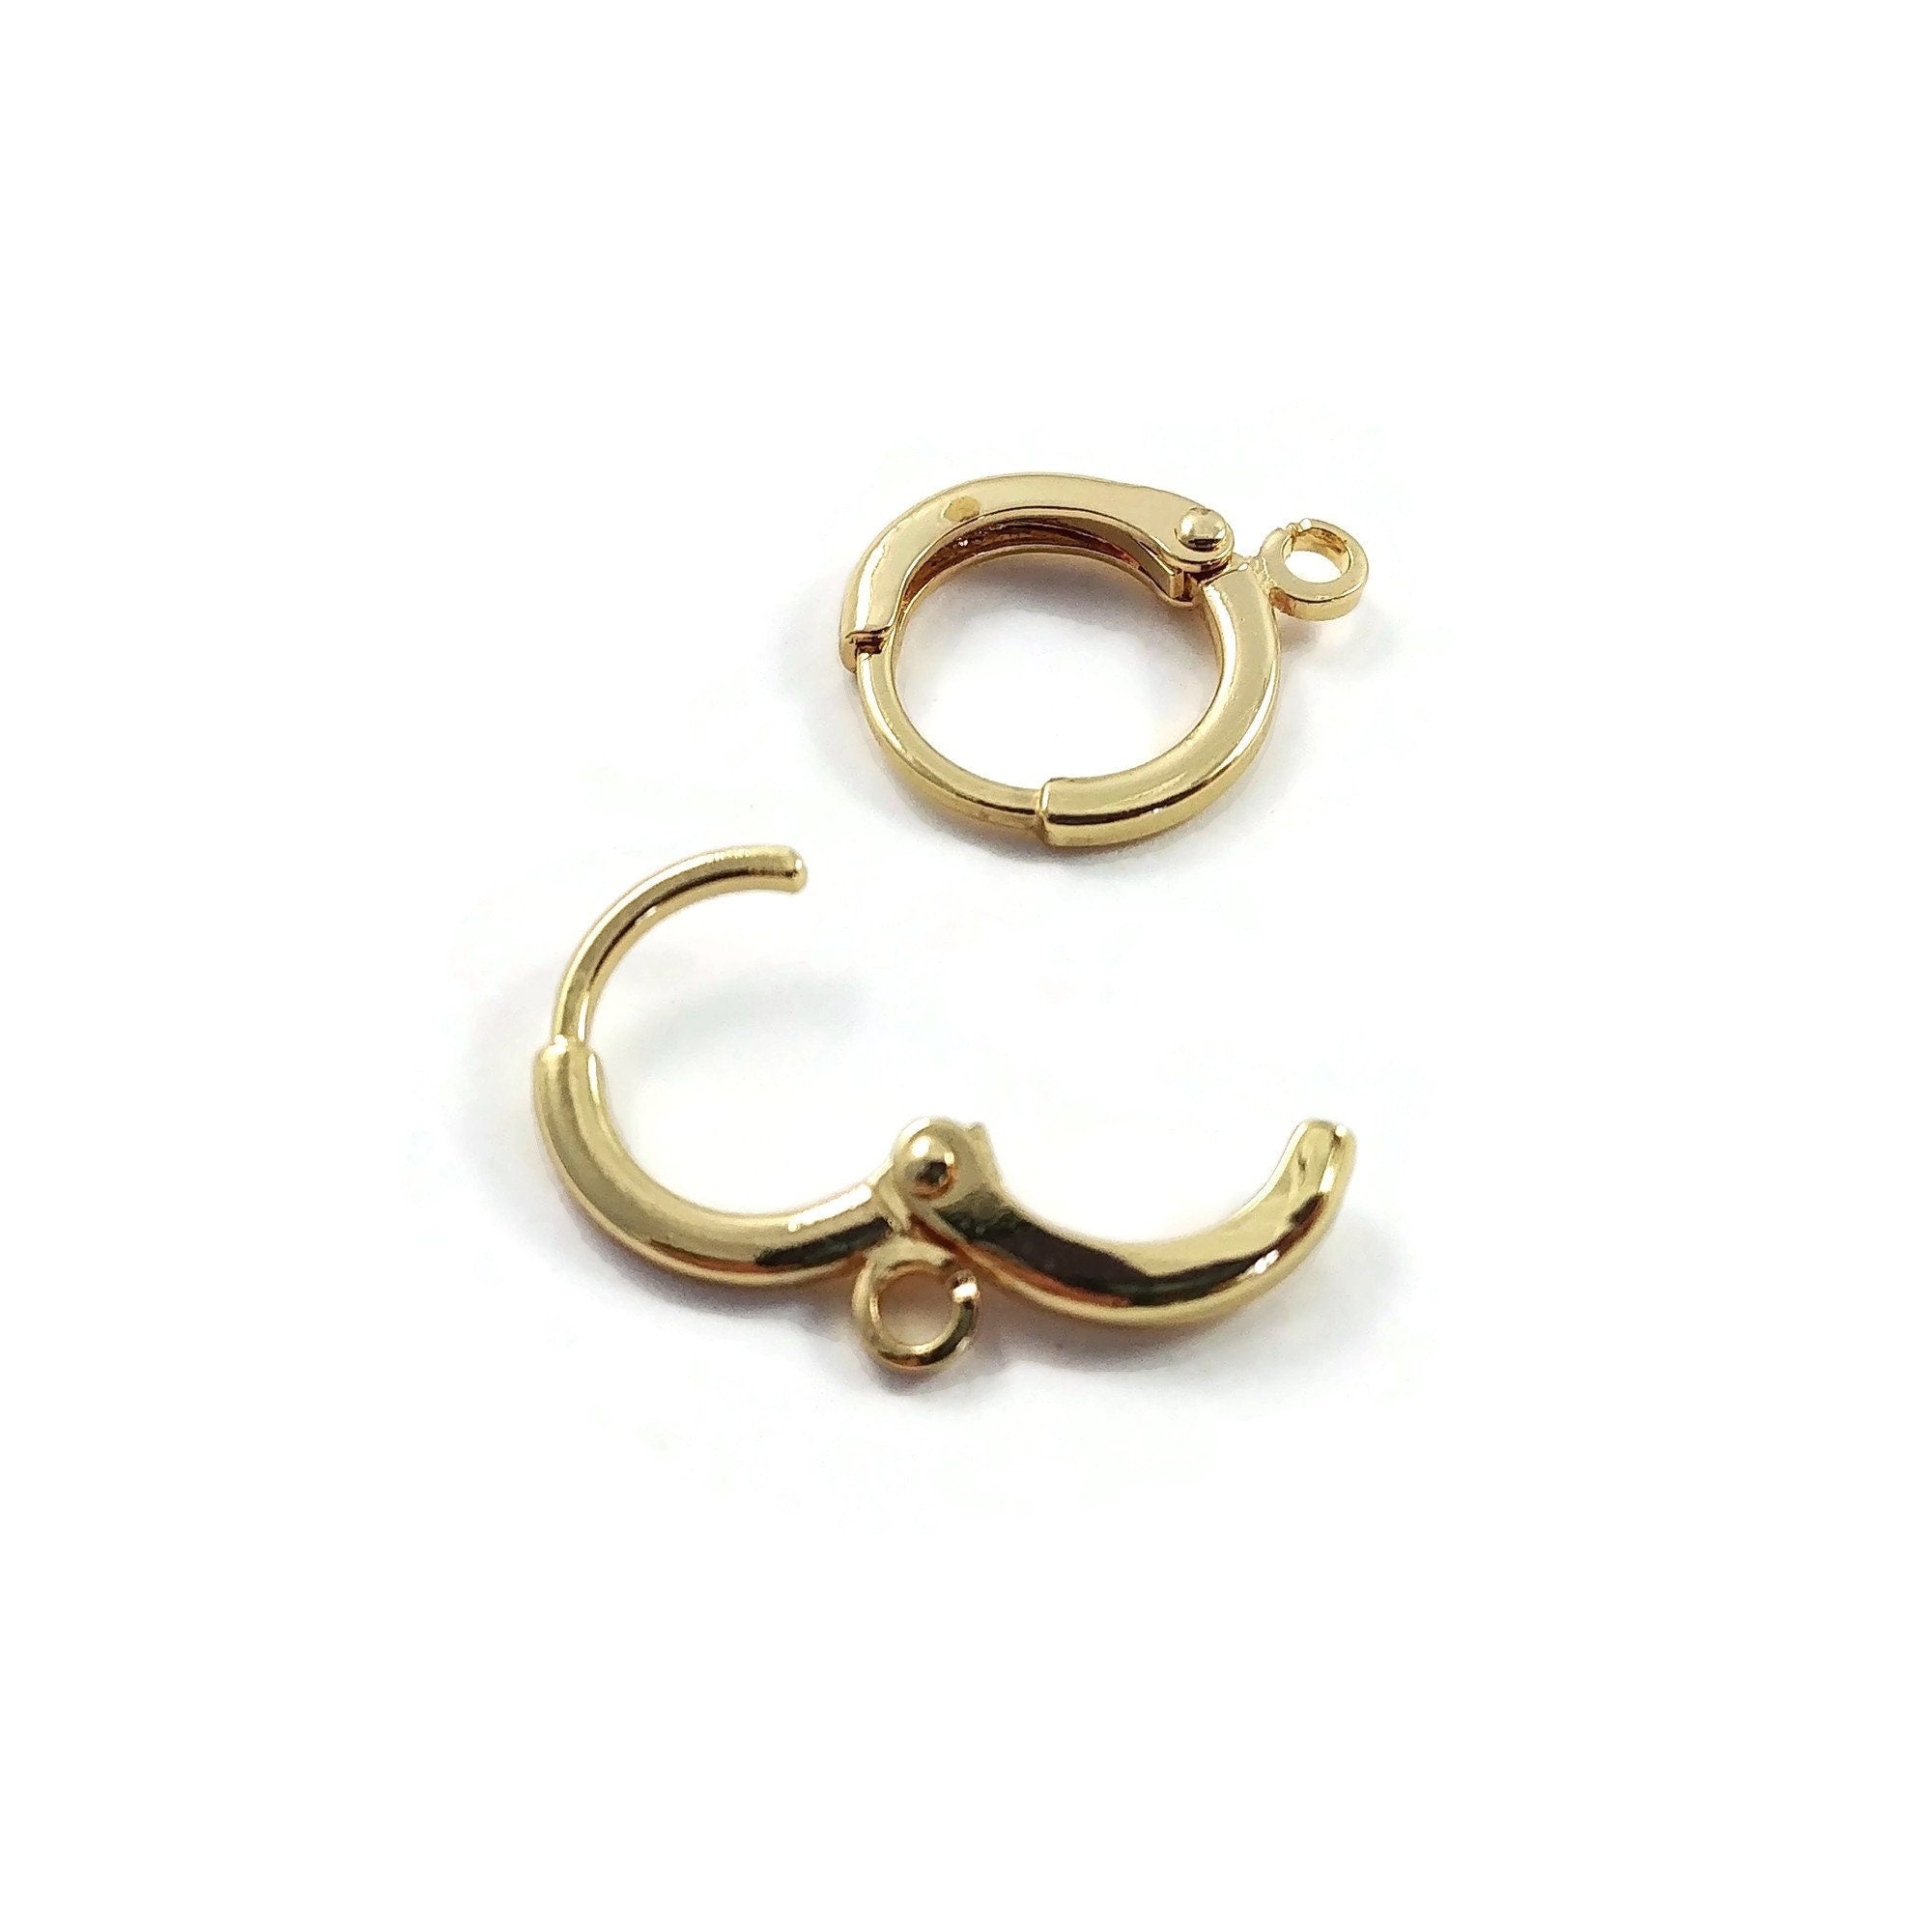 Gold, Silver, Huggie hoops with loop, Nickel free brass earring findings, Leverback ear wire for jewelry making